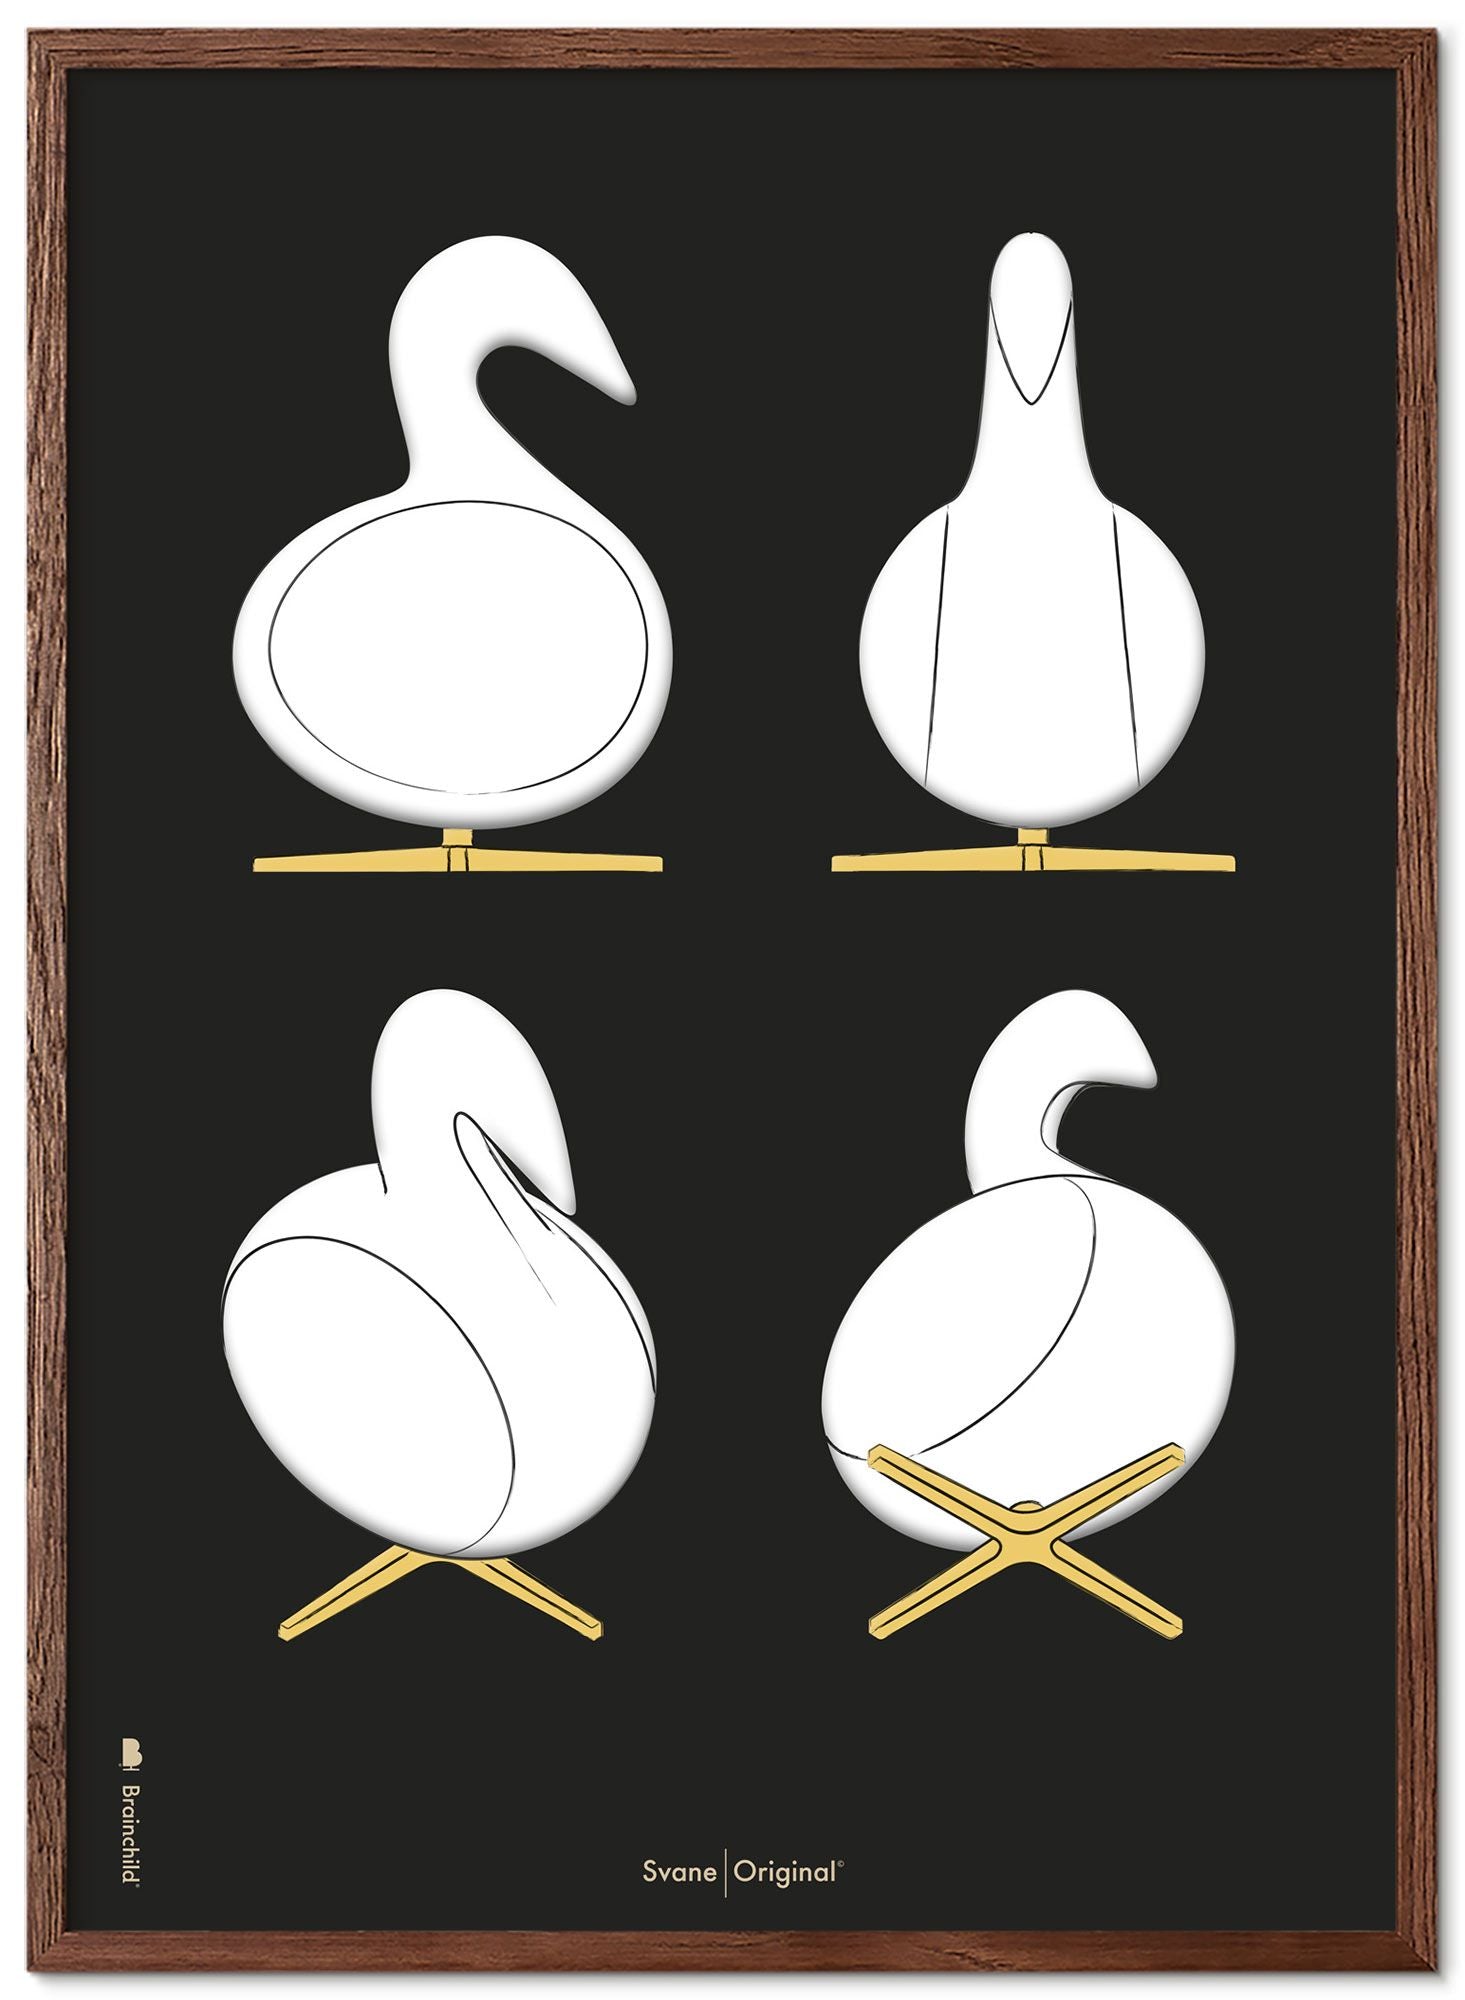 Brainchild Swan Design Sketches Poster Frame Made Of Dark Wood 70x100 Cm, Black Background